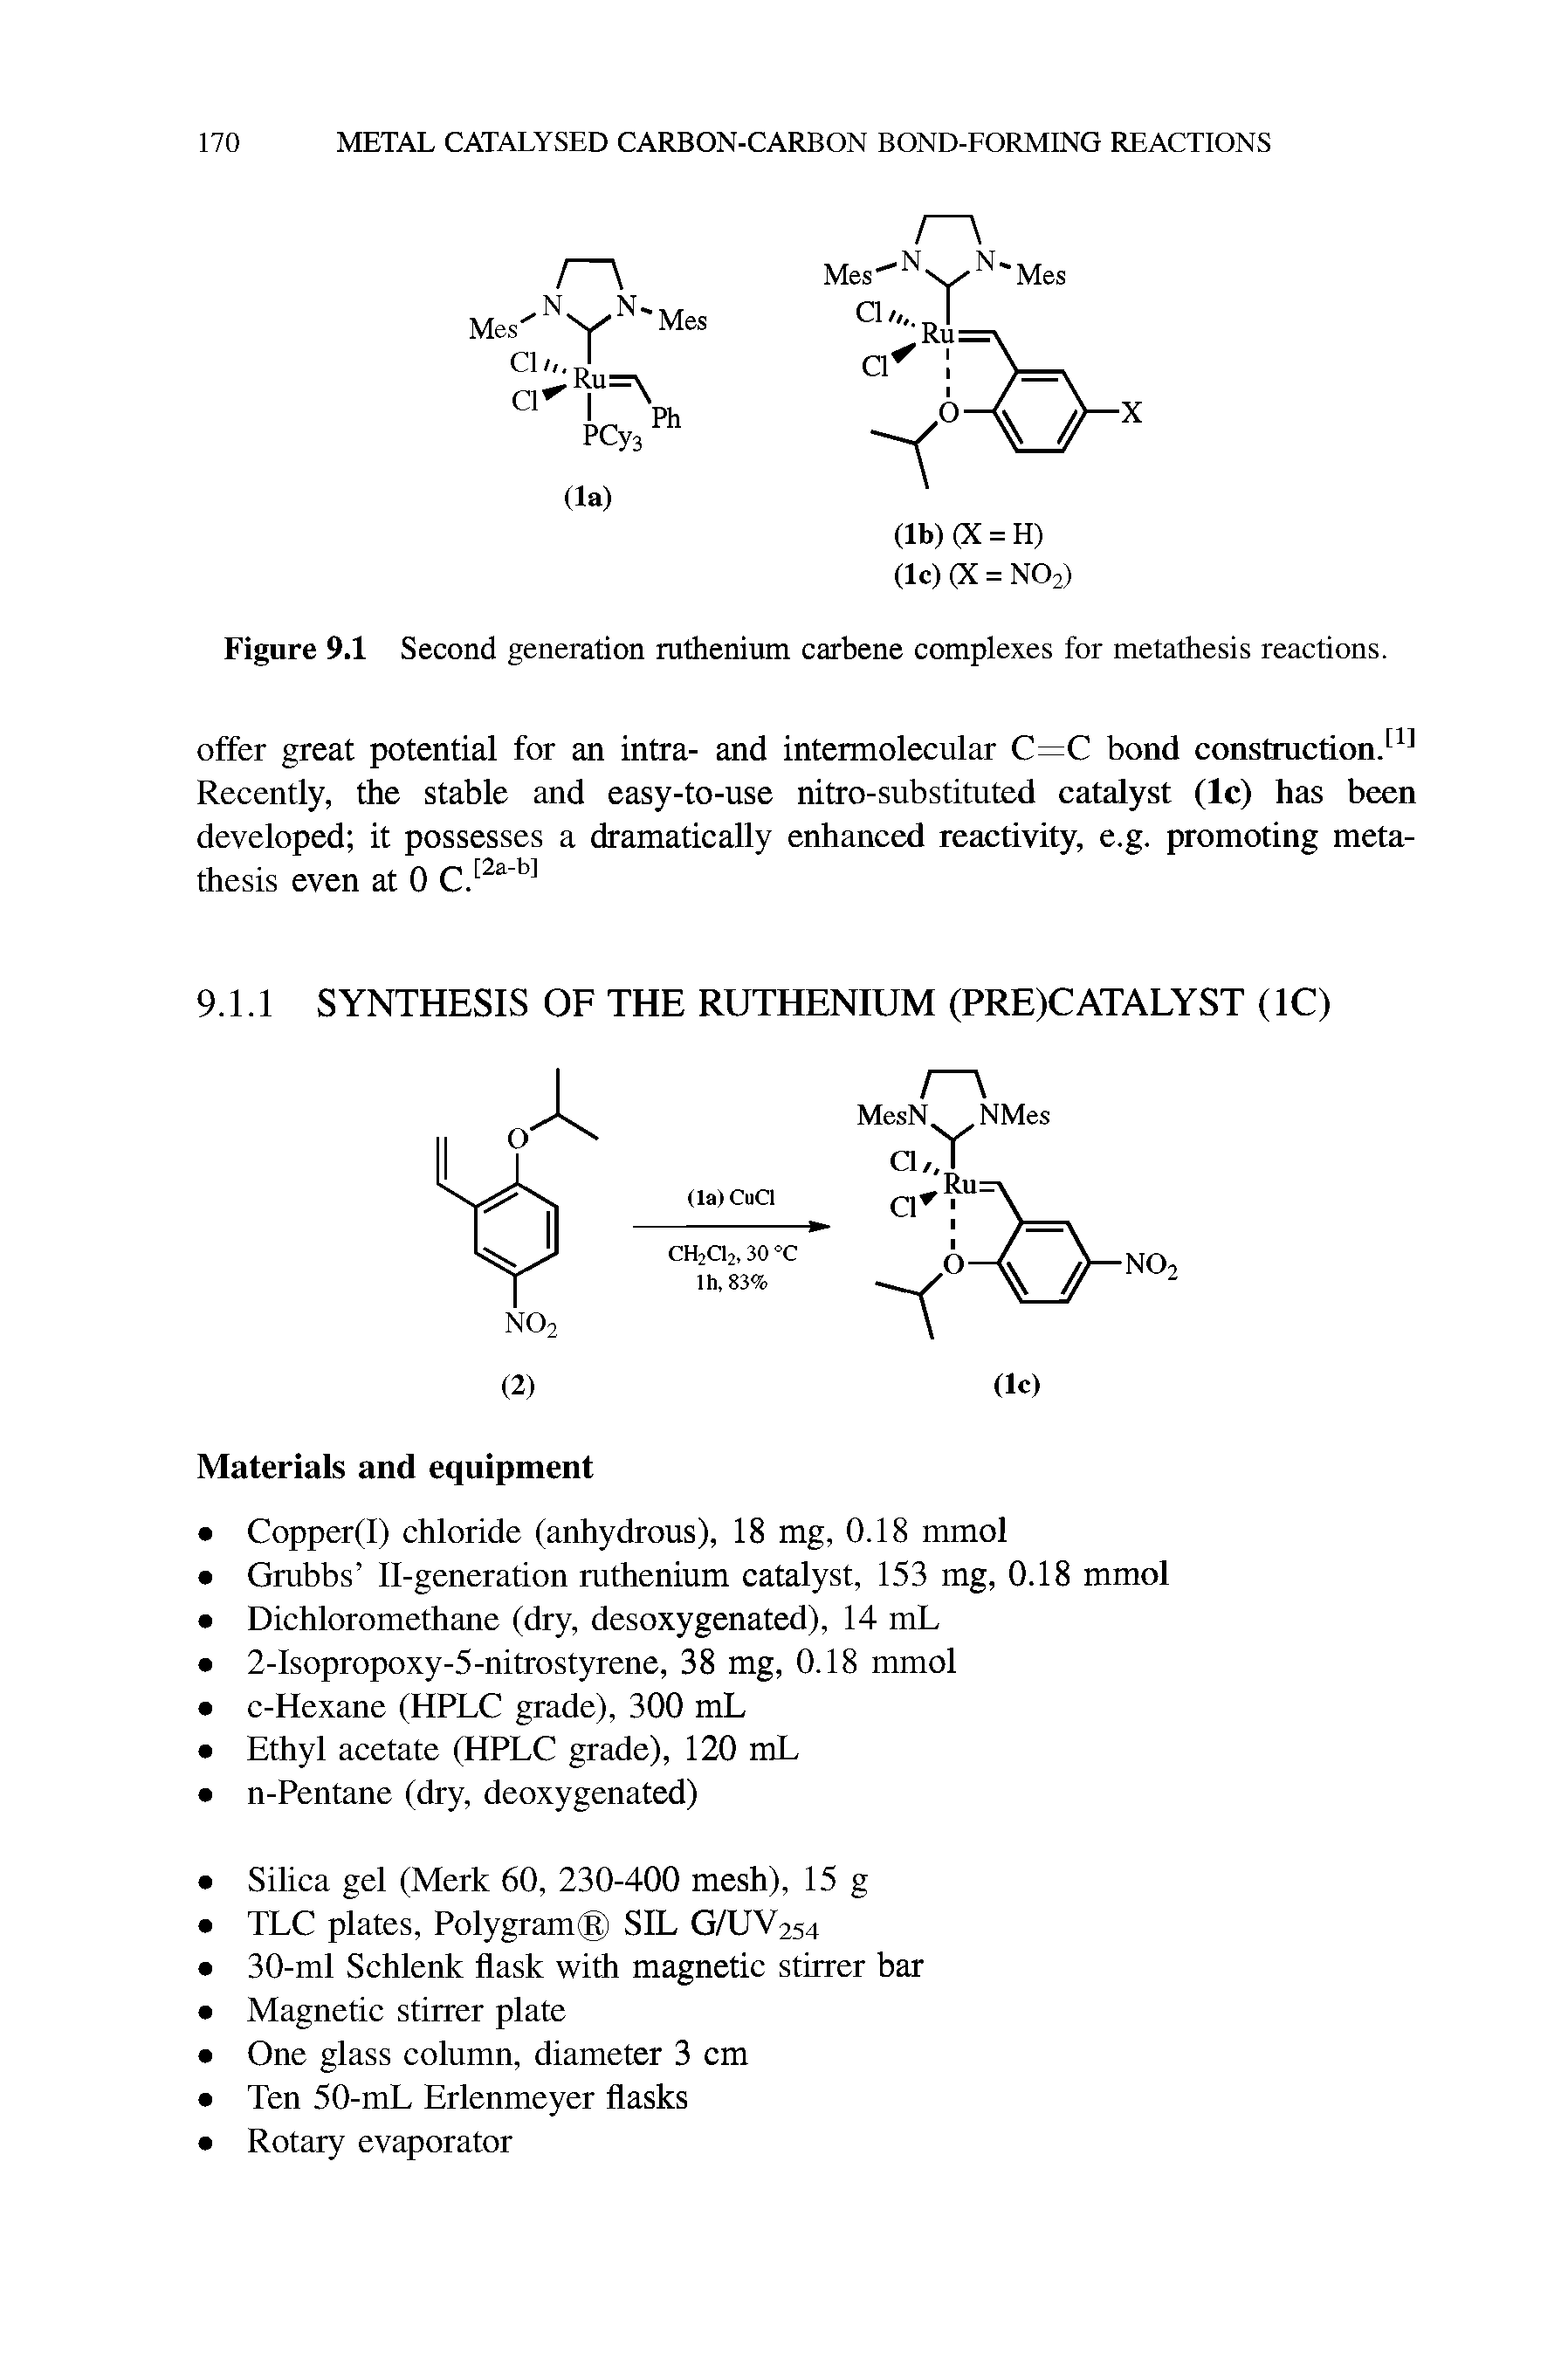 Figure 9.1 Second generation ruthenium carbene complexes for metathesis reactions.